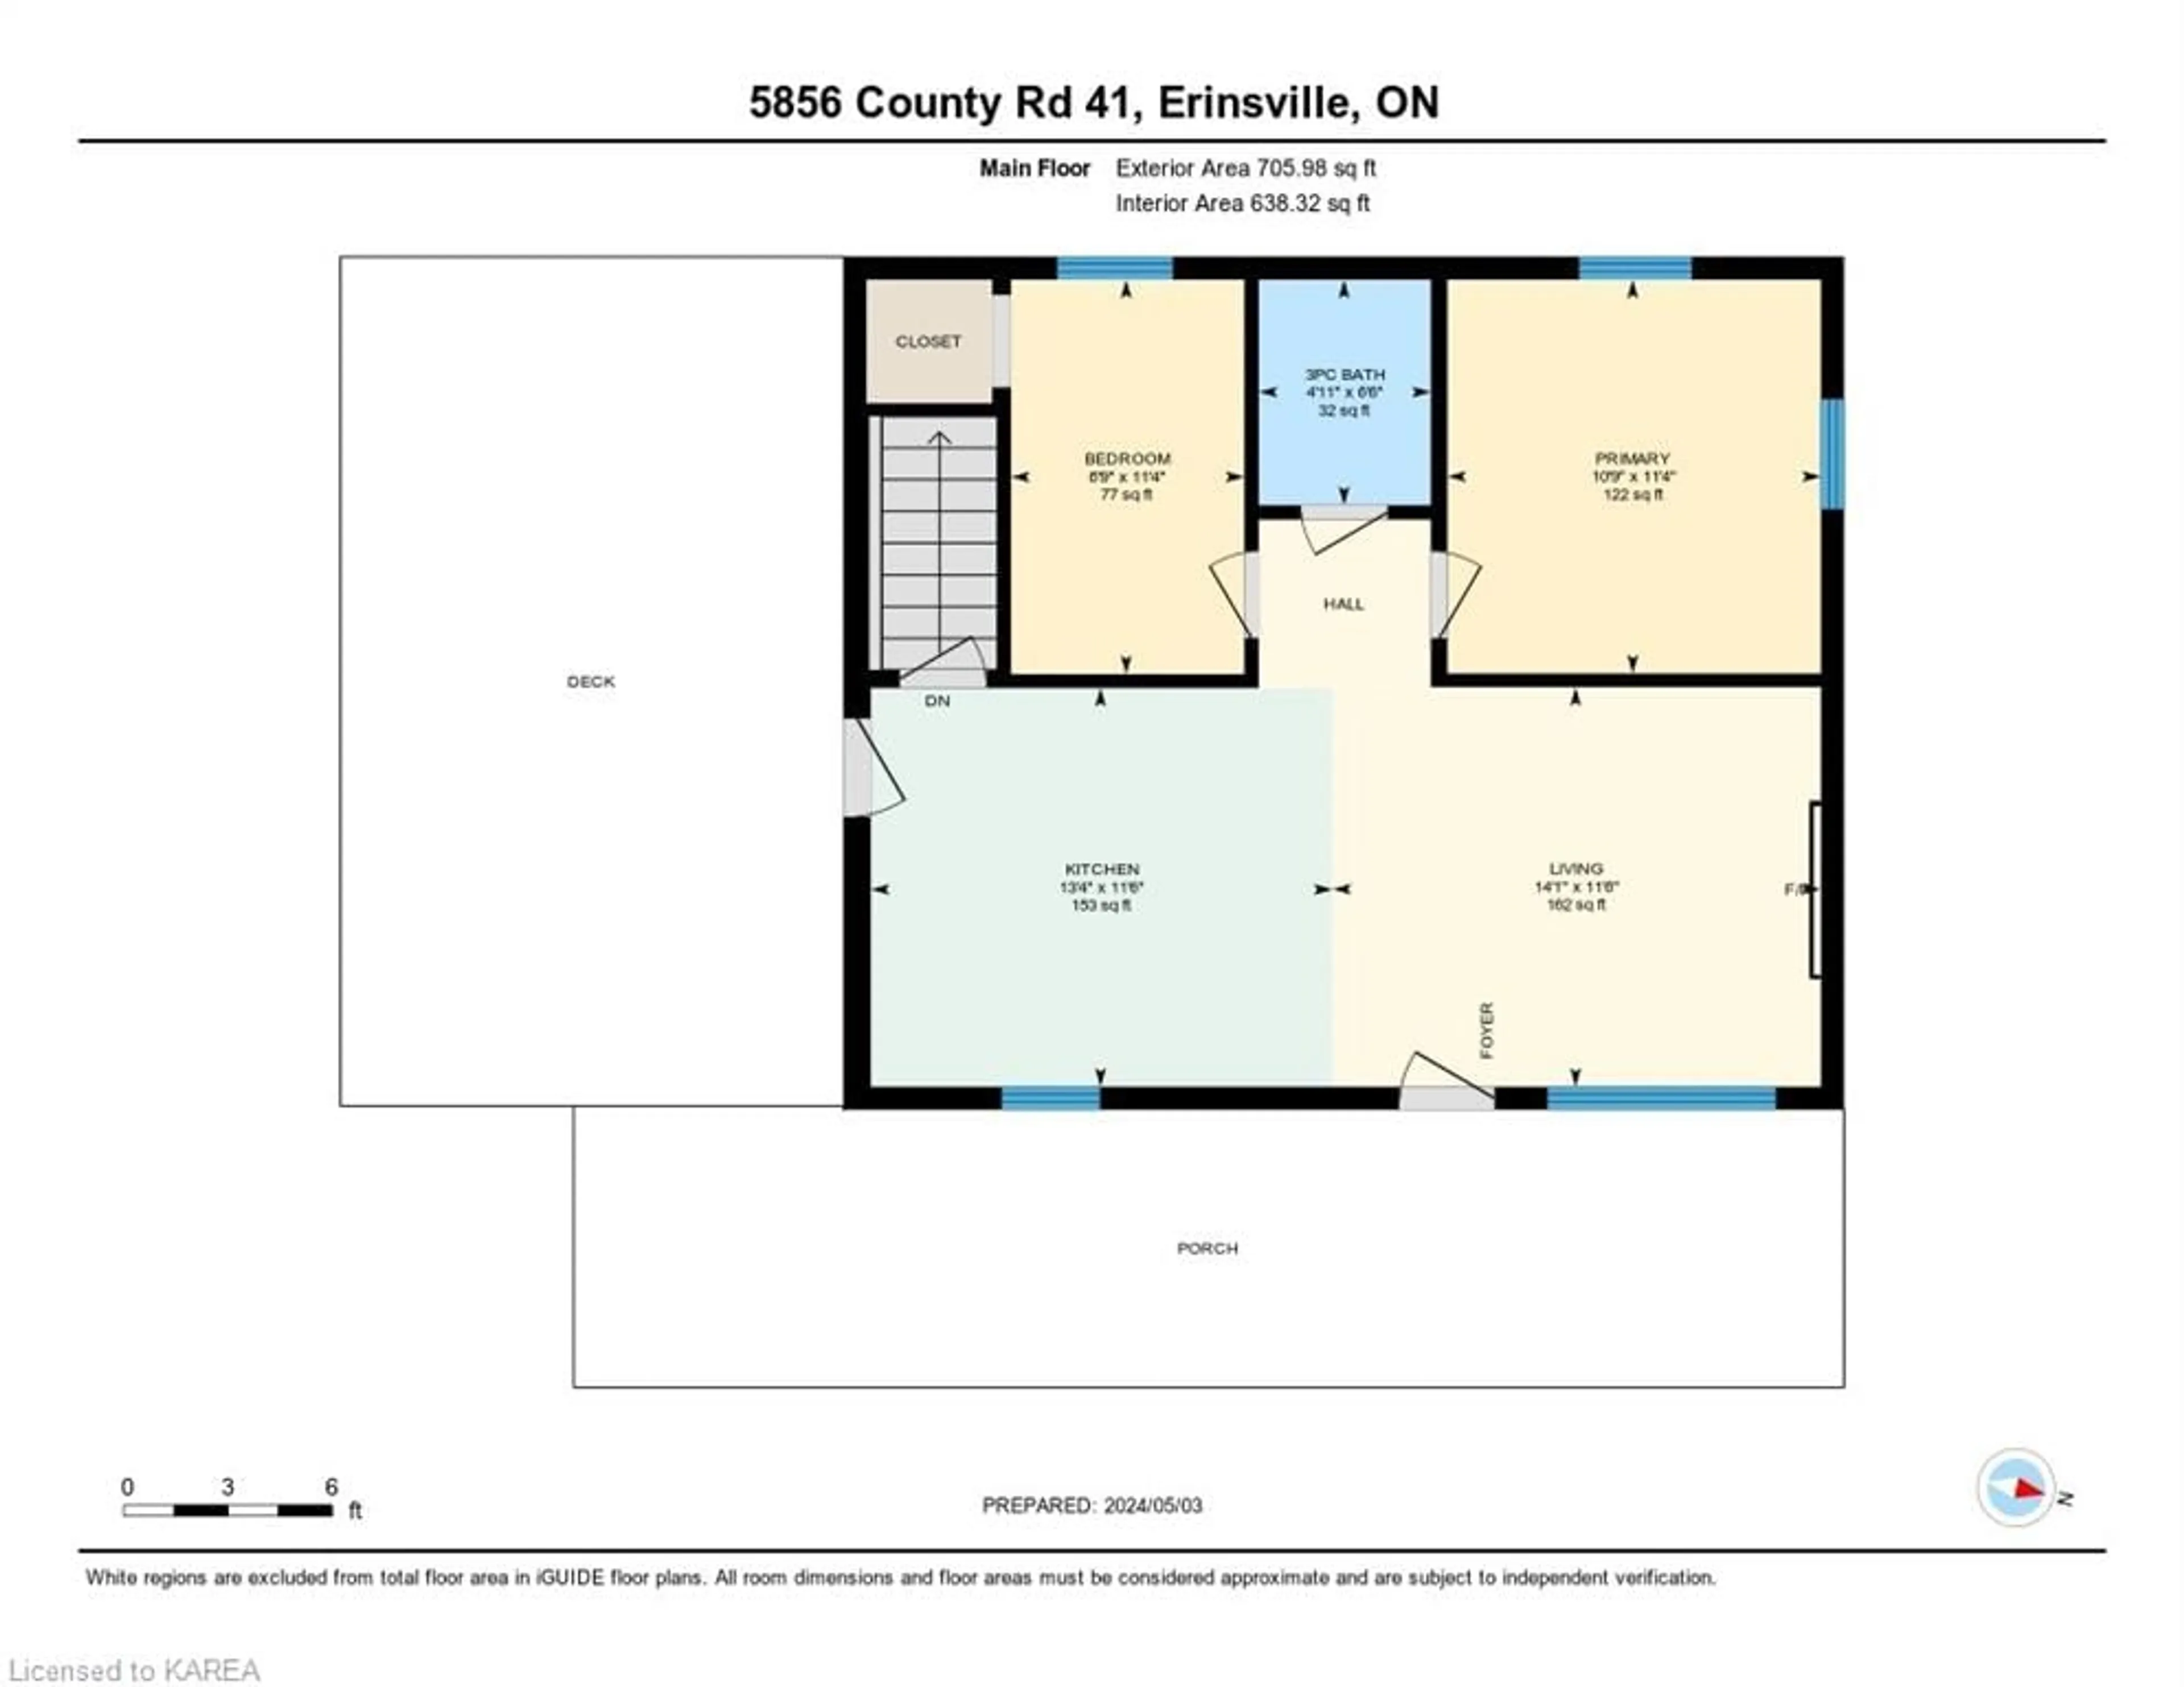 Floor plan for 5856 County Rd 41 Rd, Erinsville Ontario K0K 2A0